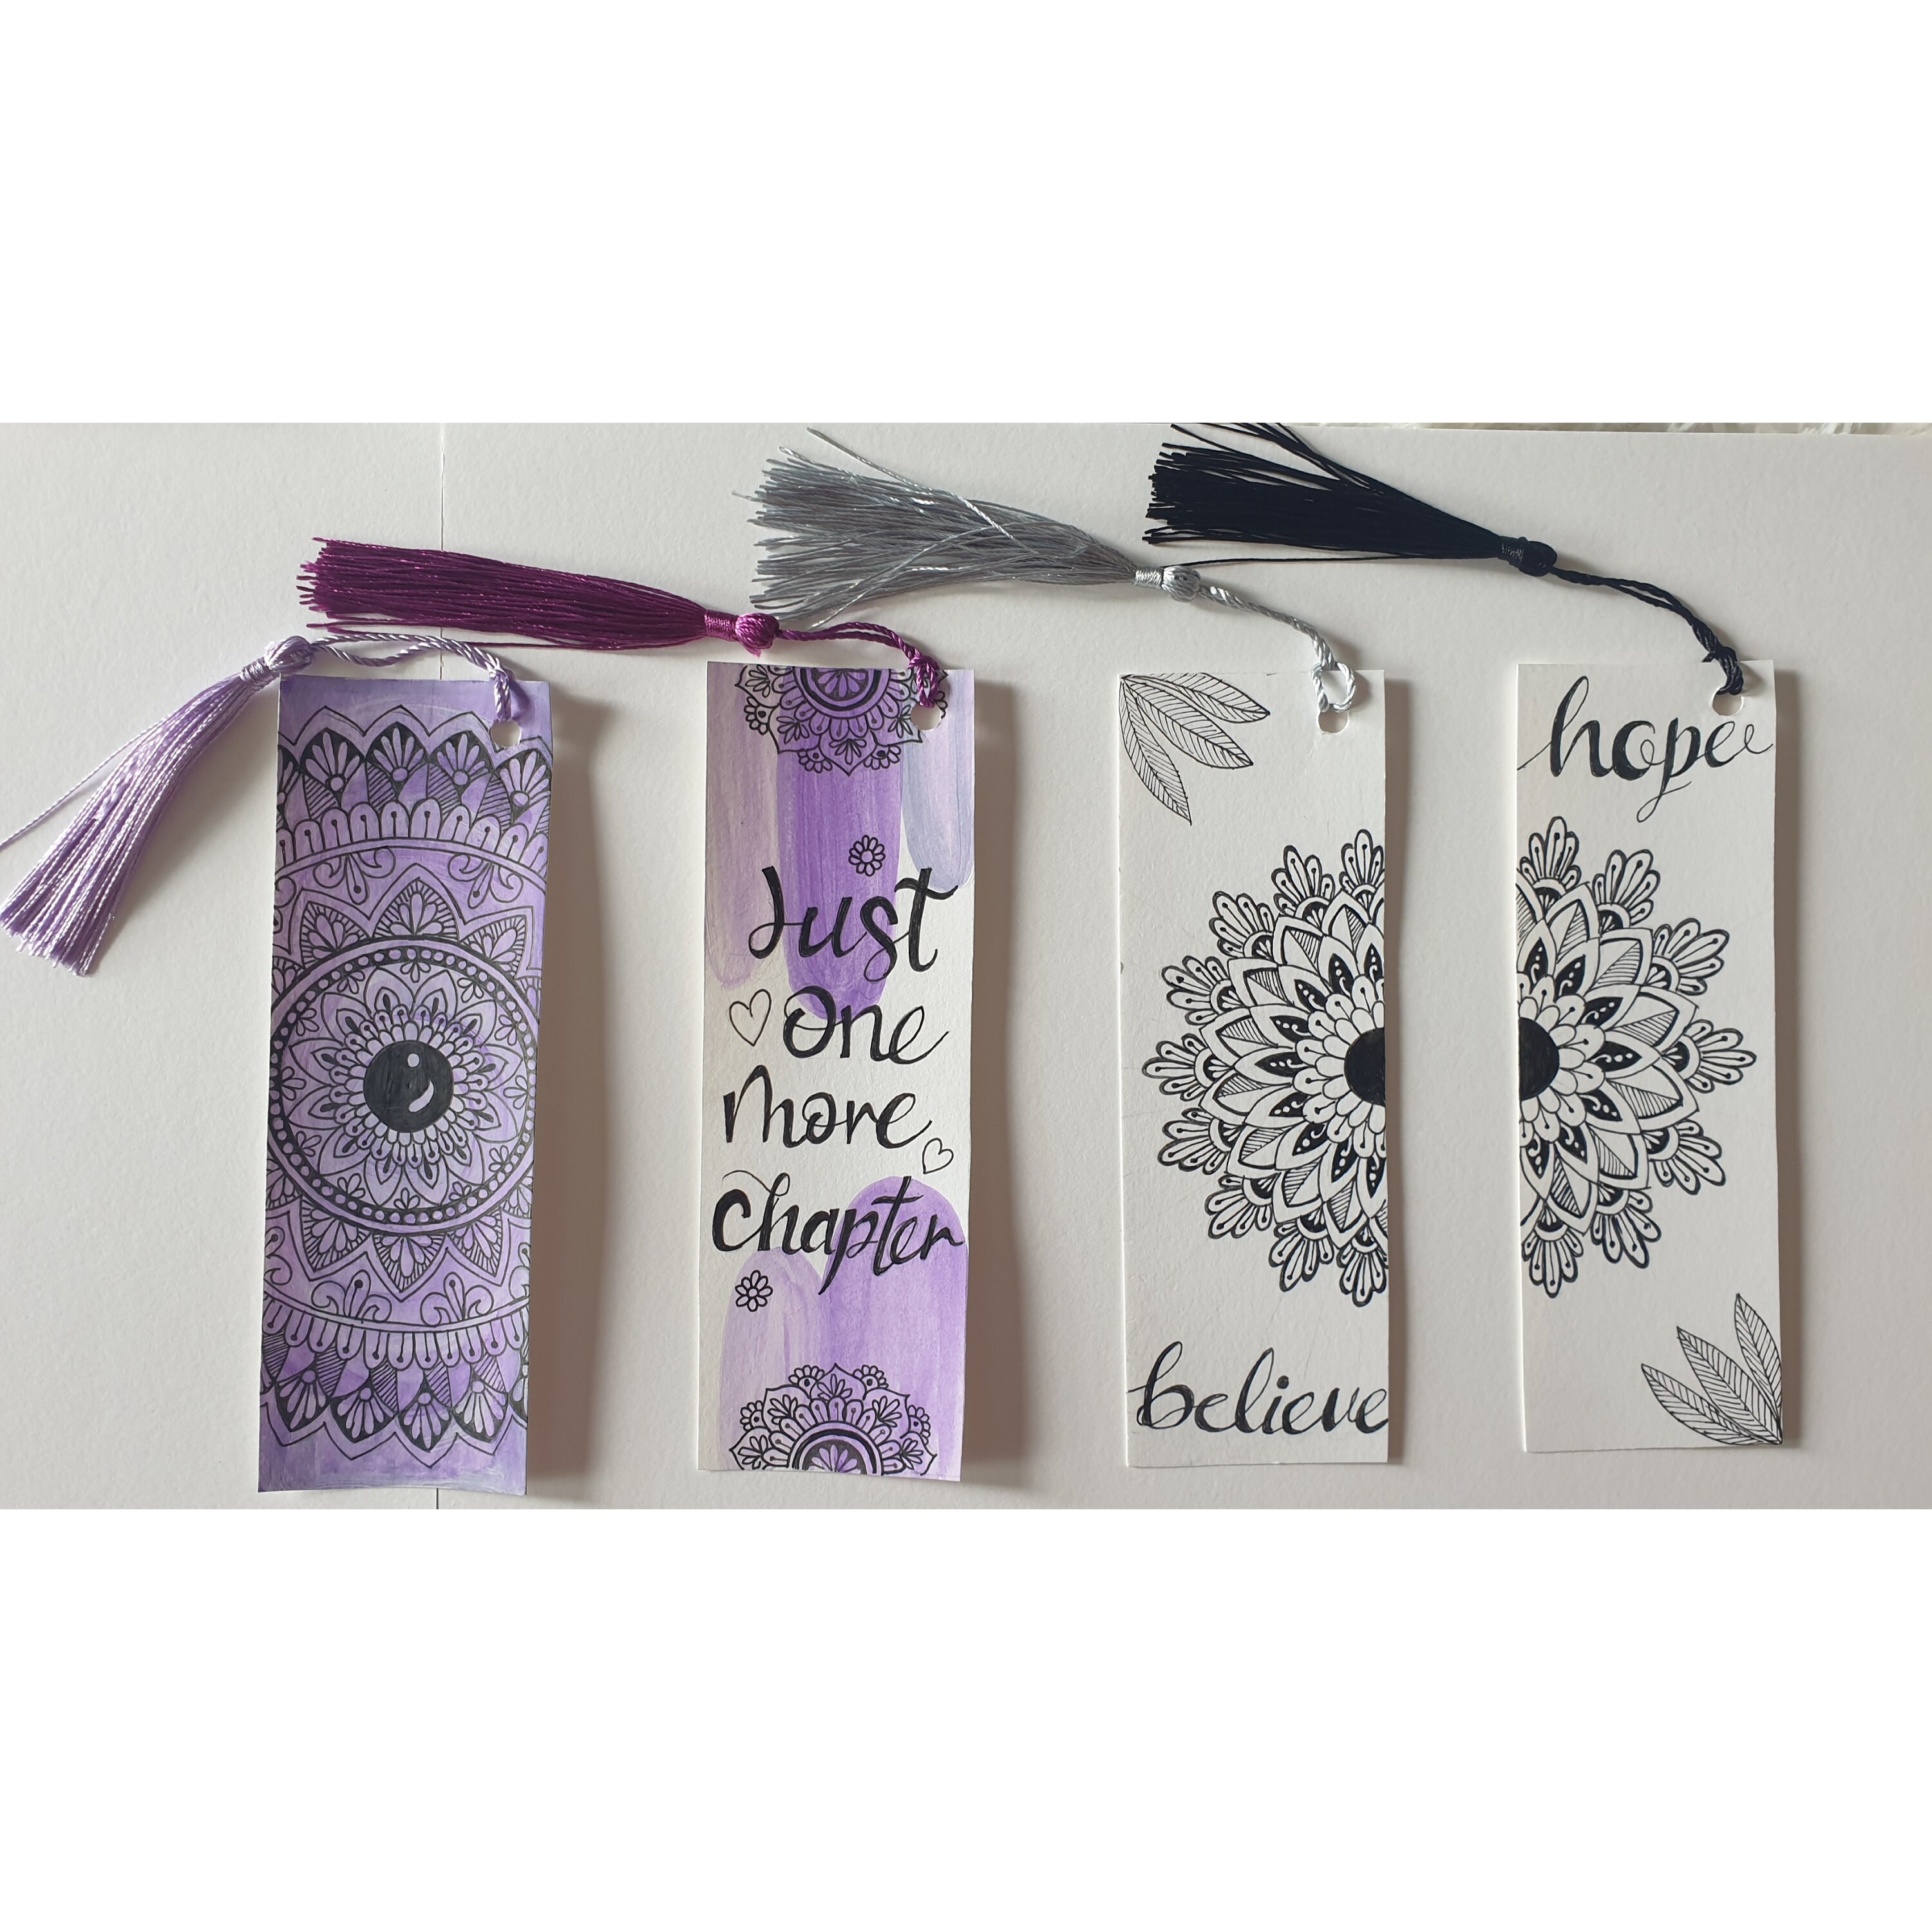 Mandala Crafts Bookmark Tassels for Crafts – Mini Tassels for Bookmark –  MudraCrafts